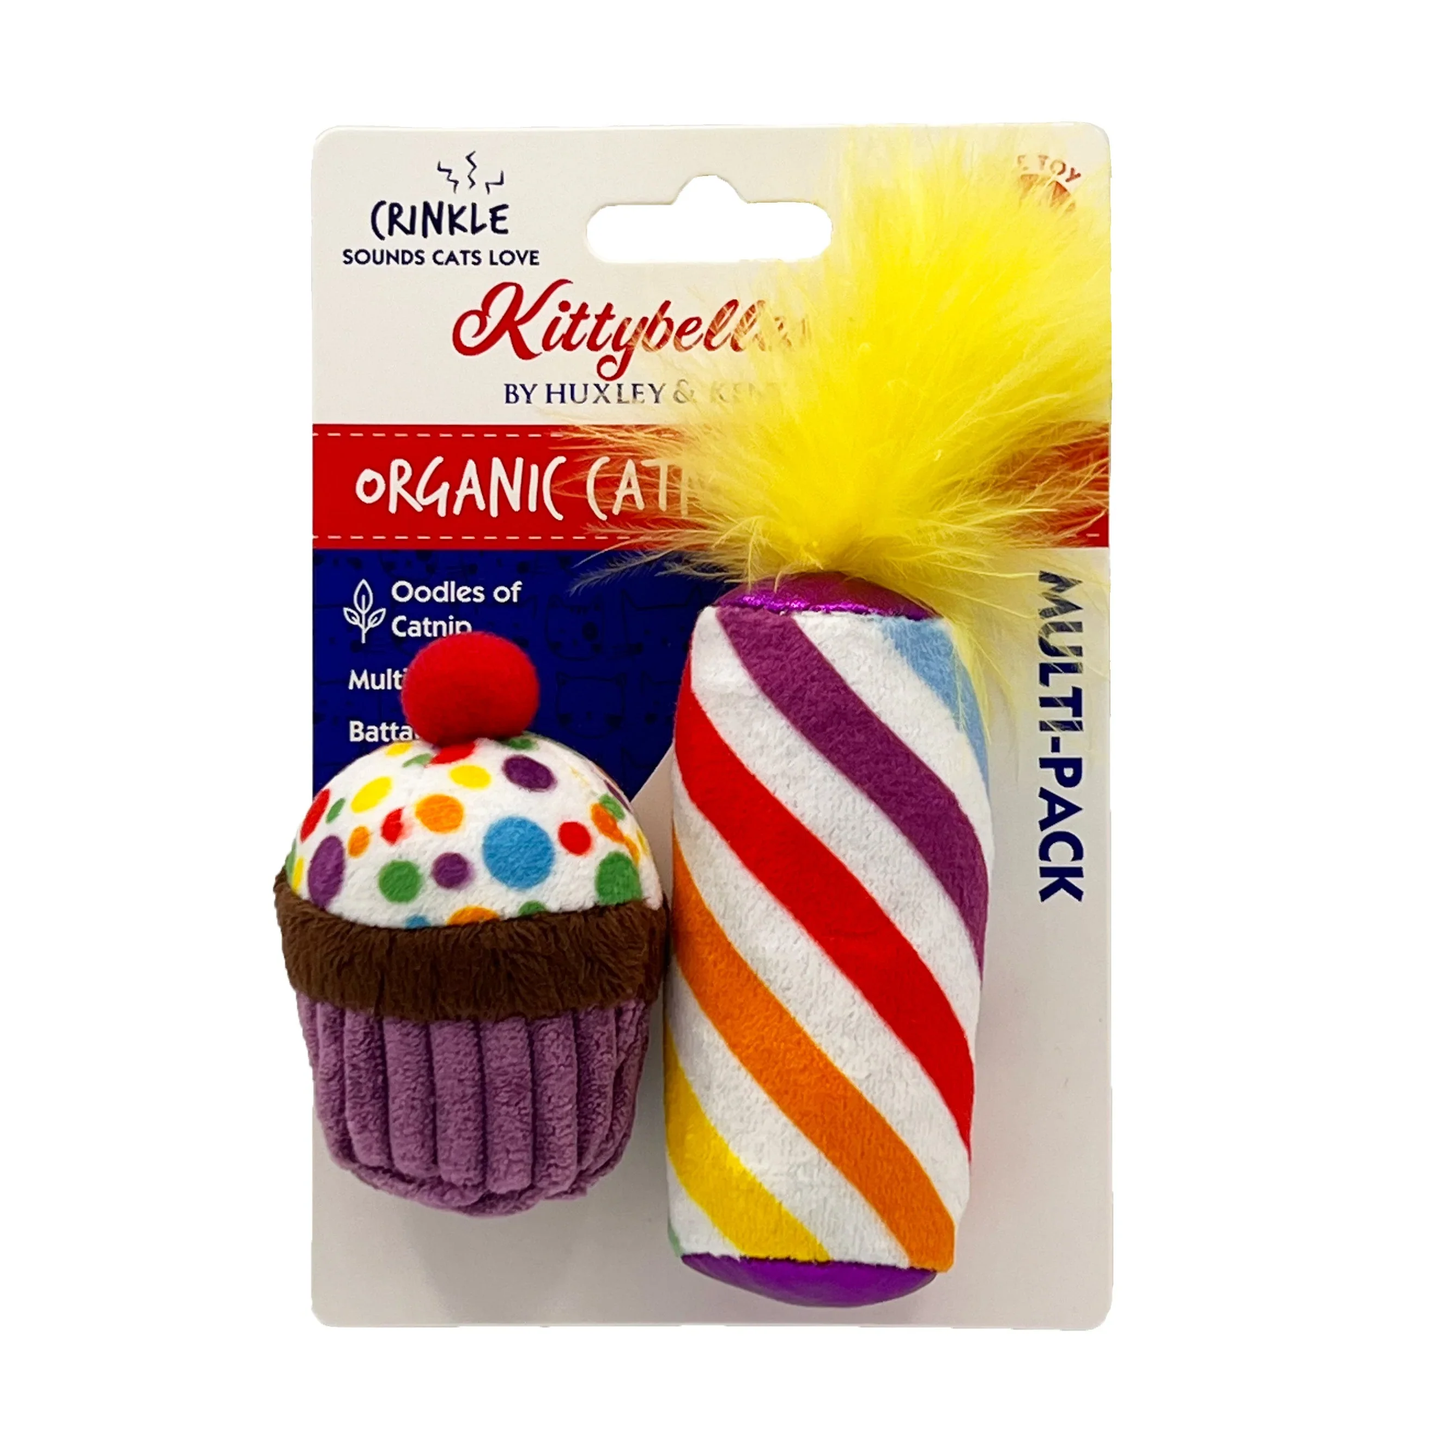 Huxley & Kent Organic Catnip Mewow Cupcake & Candle Toy